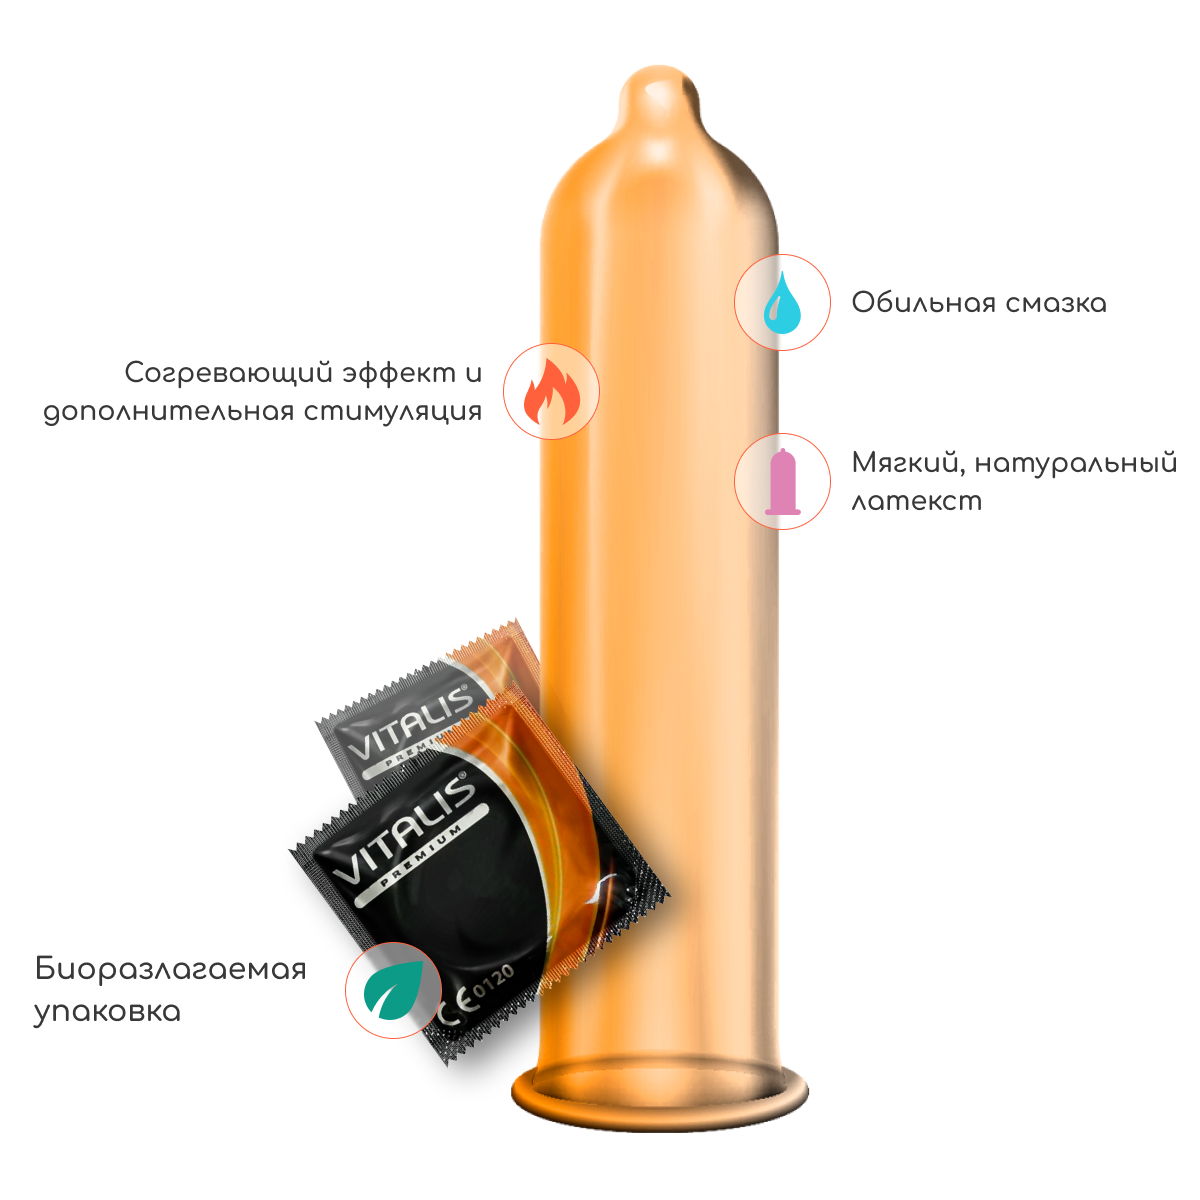 Презервативы с согревающим эффектом Vitalis Premium, 3 шт